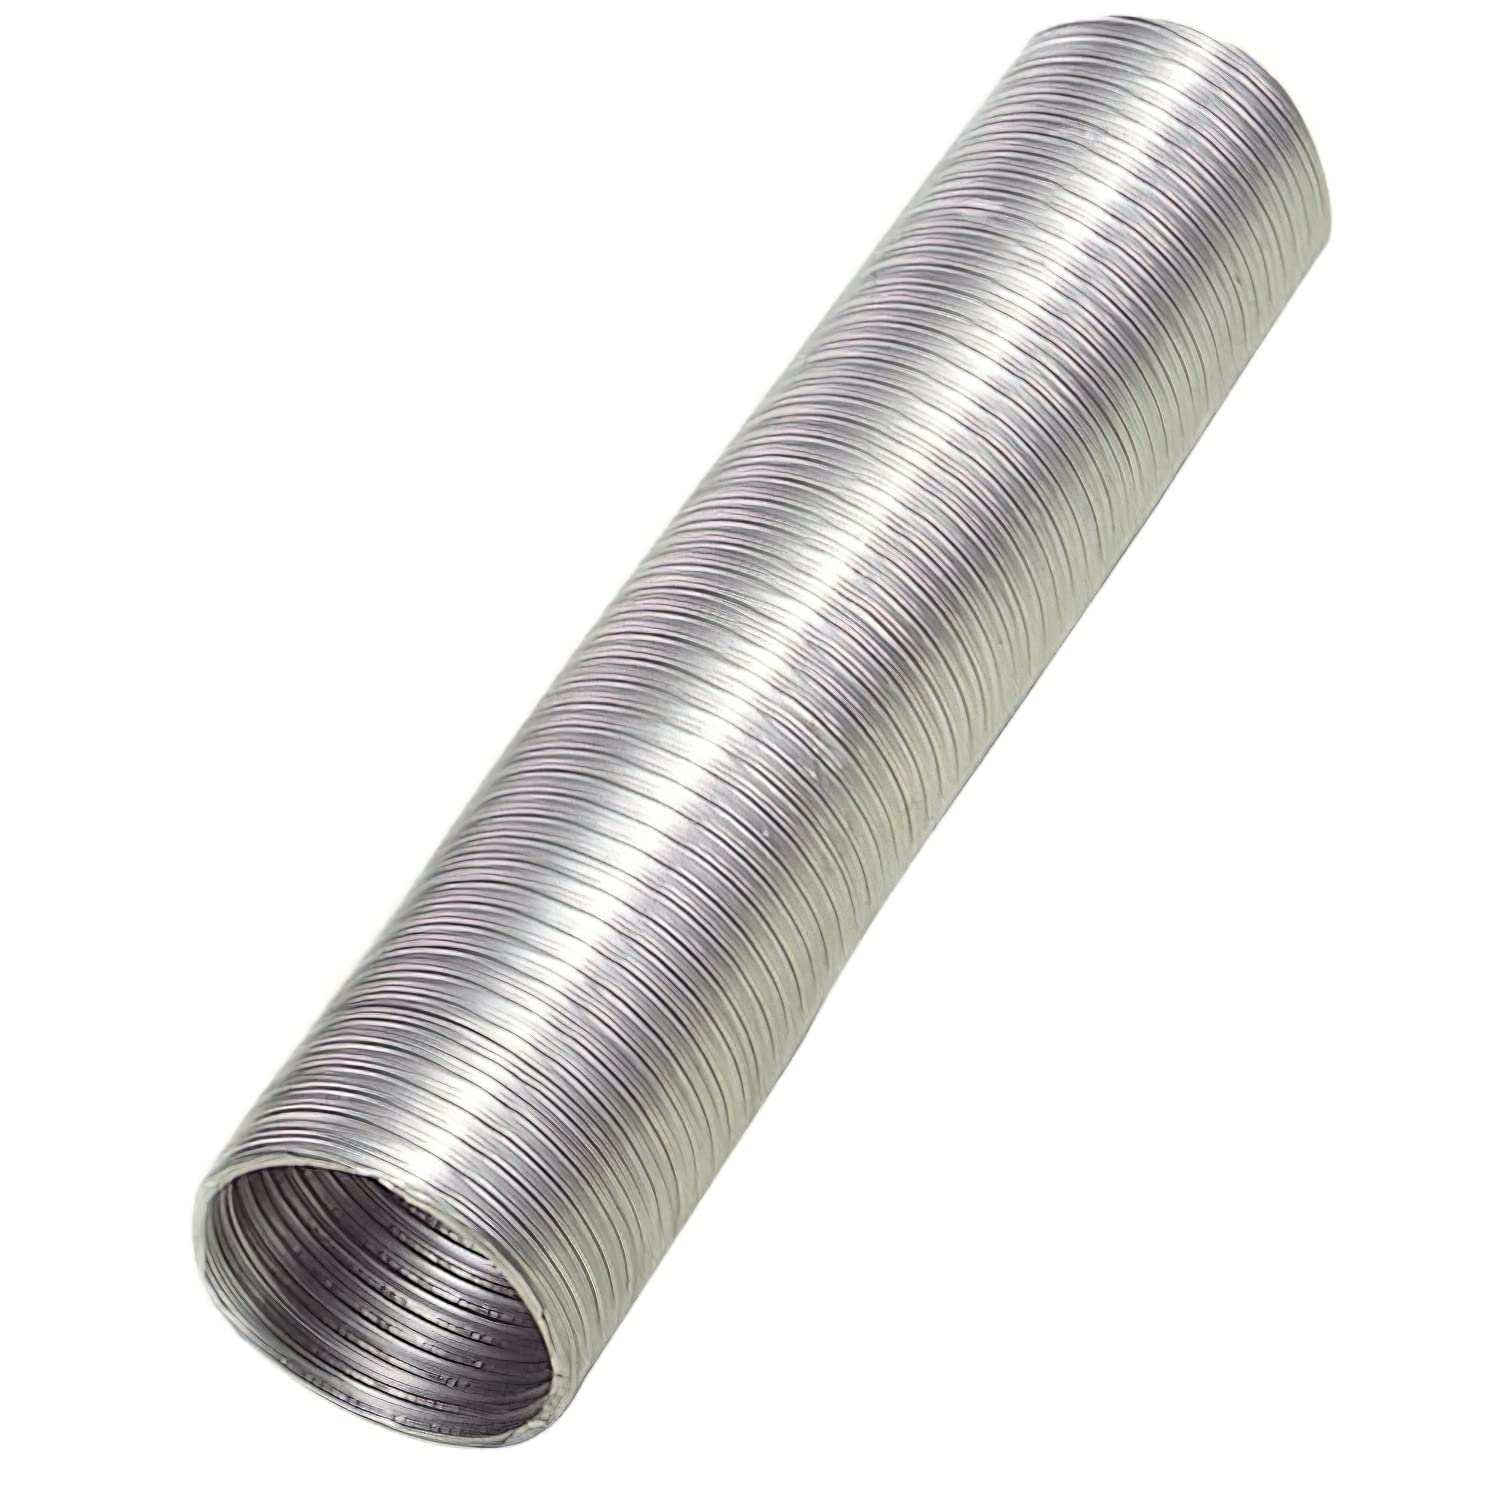 WOLFPACK 2560005 Aluminiumrohr Kompaktrohr grau 150 mm 5 m, Mehrfarbig